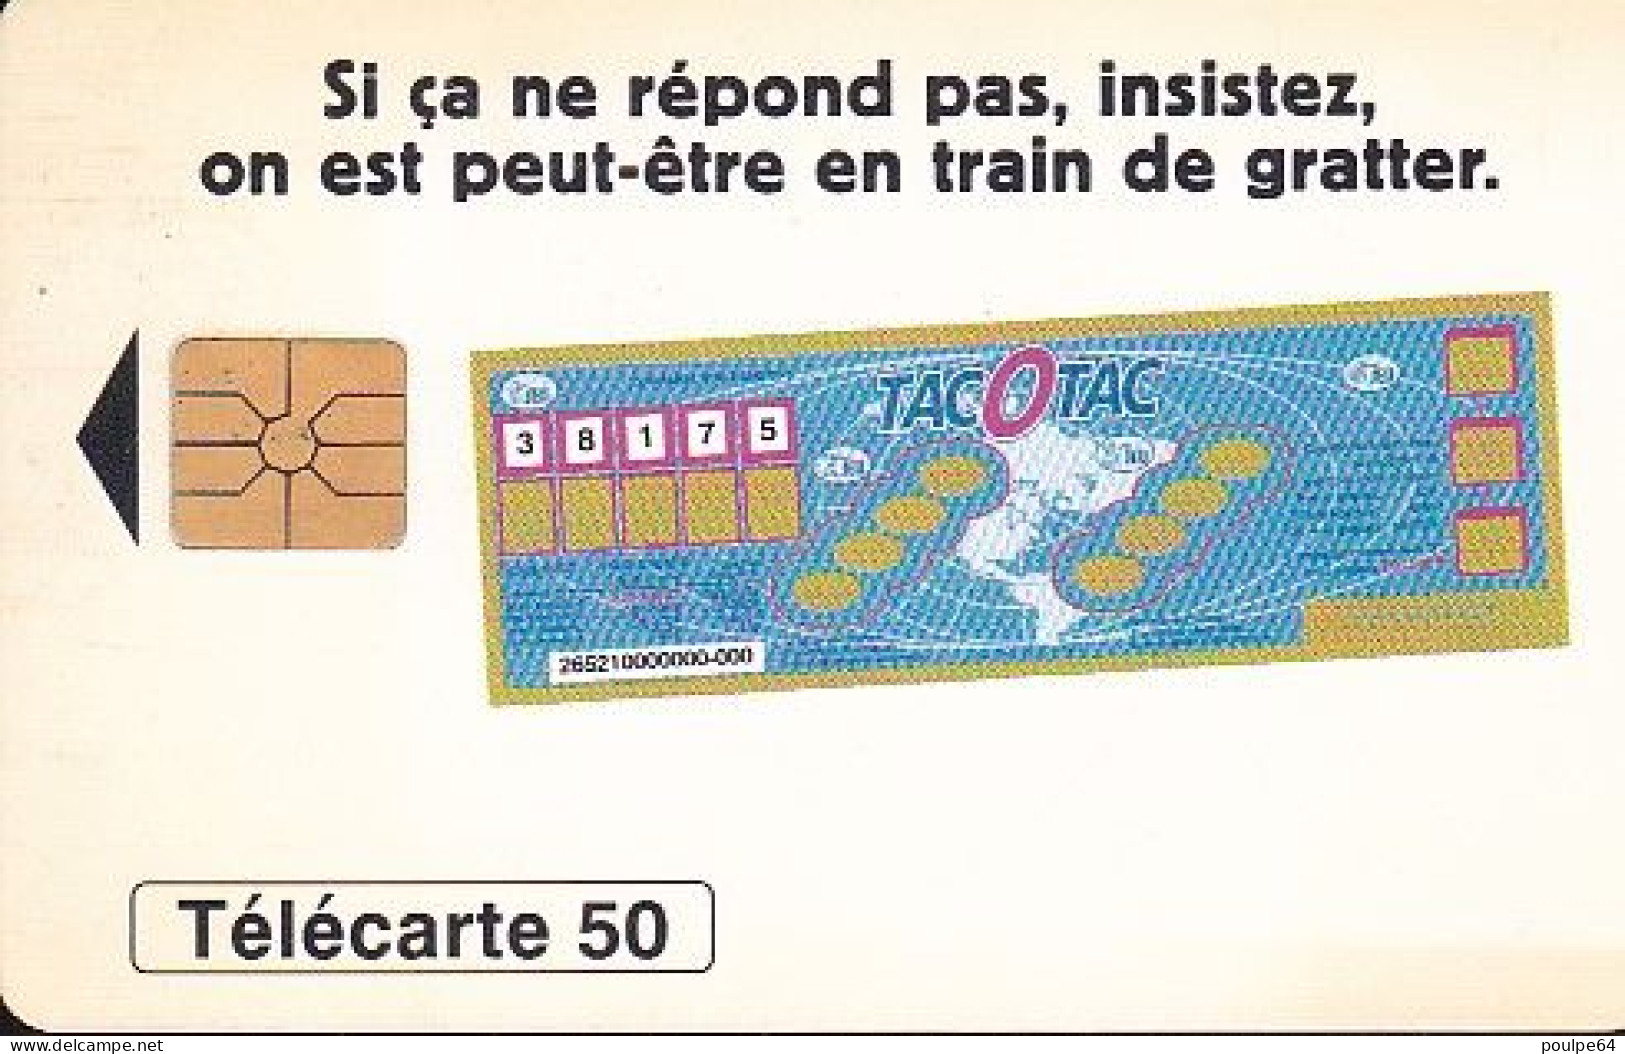 F631 03/1996 - TAC O TAC - 50 GEM1A - 1996